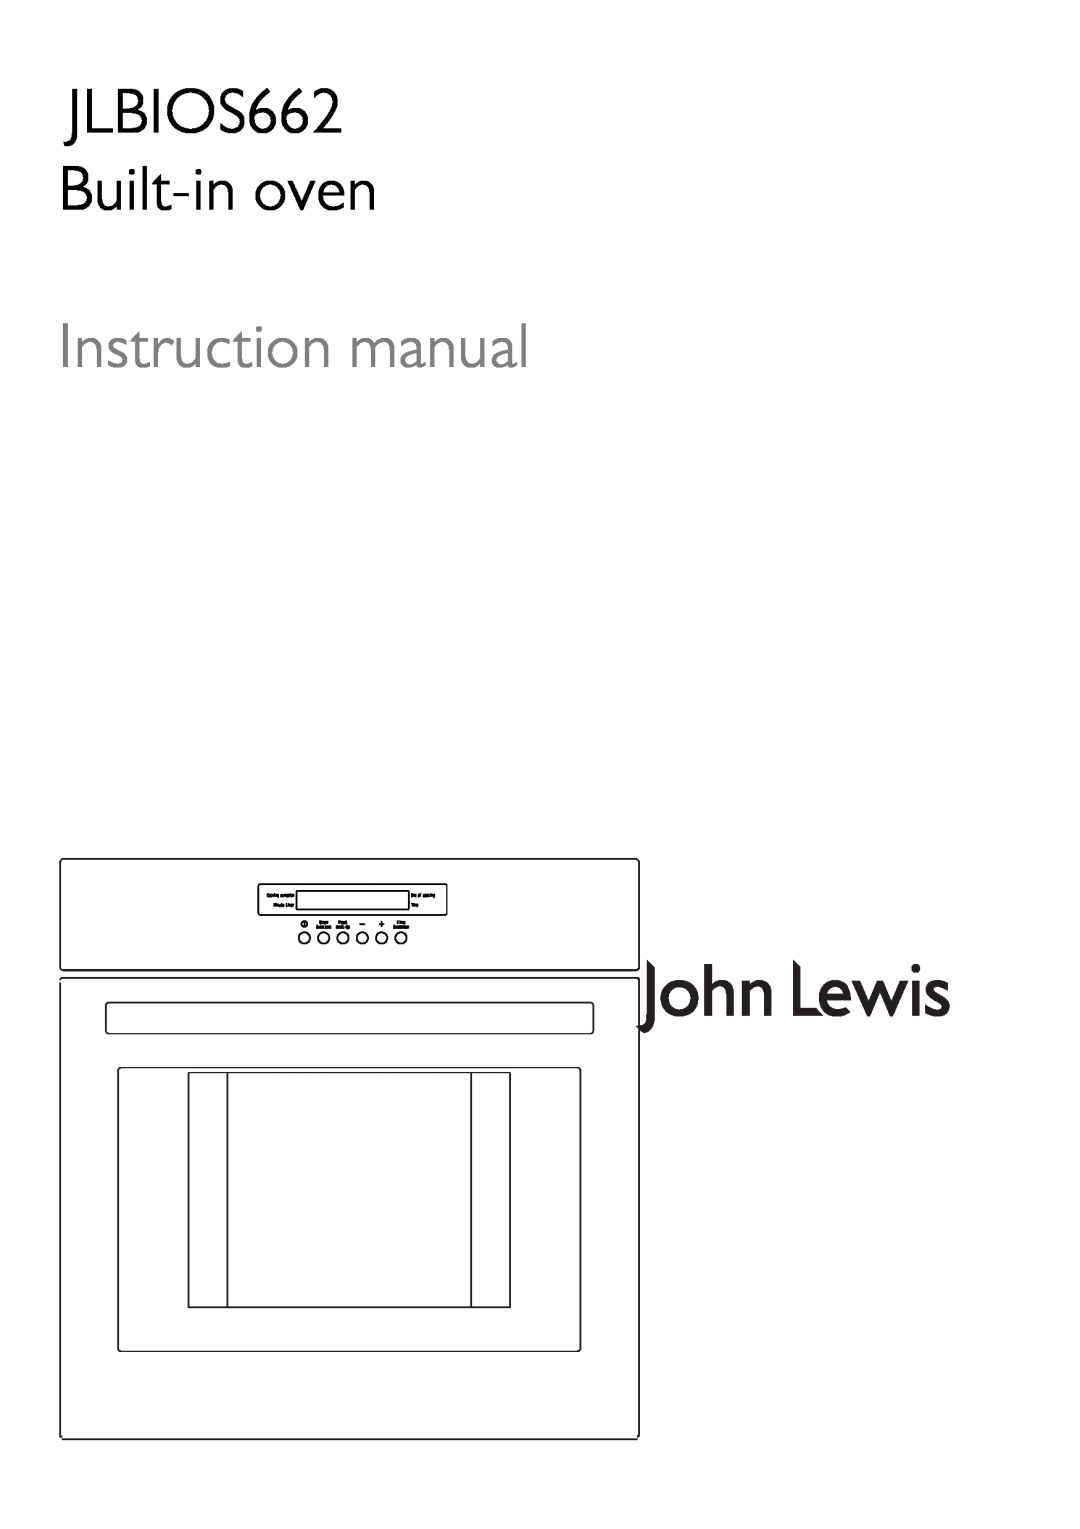 John Lewis instruction manual JLBIOS662 Built-in oven 